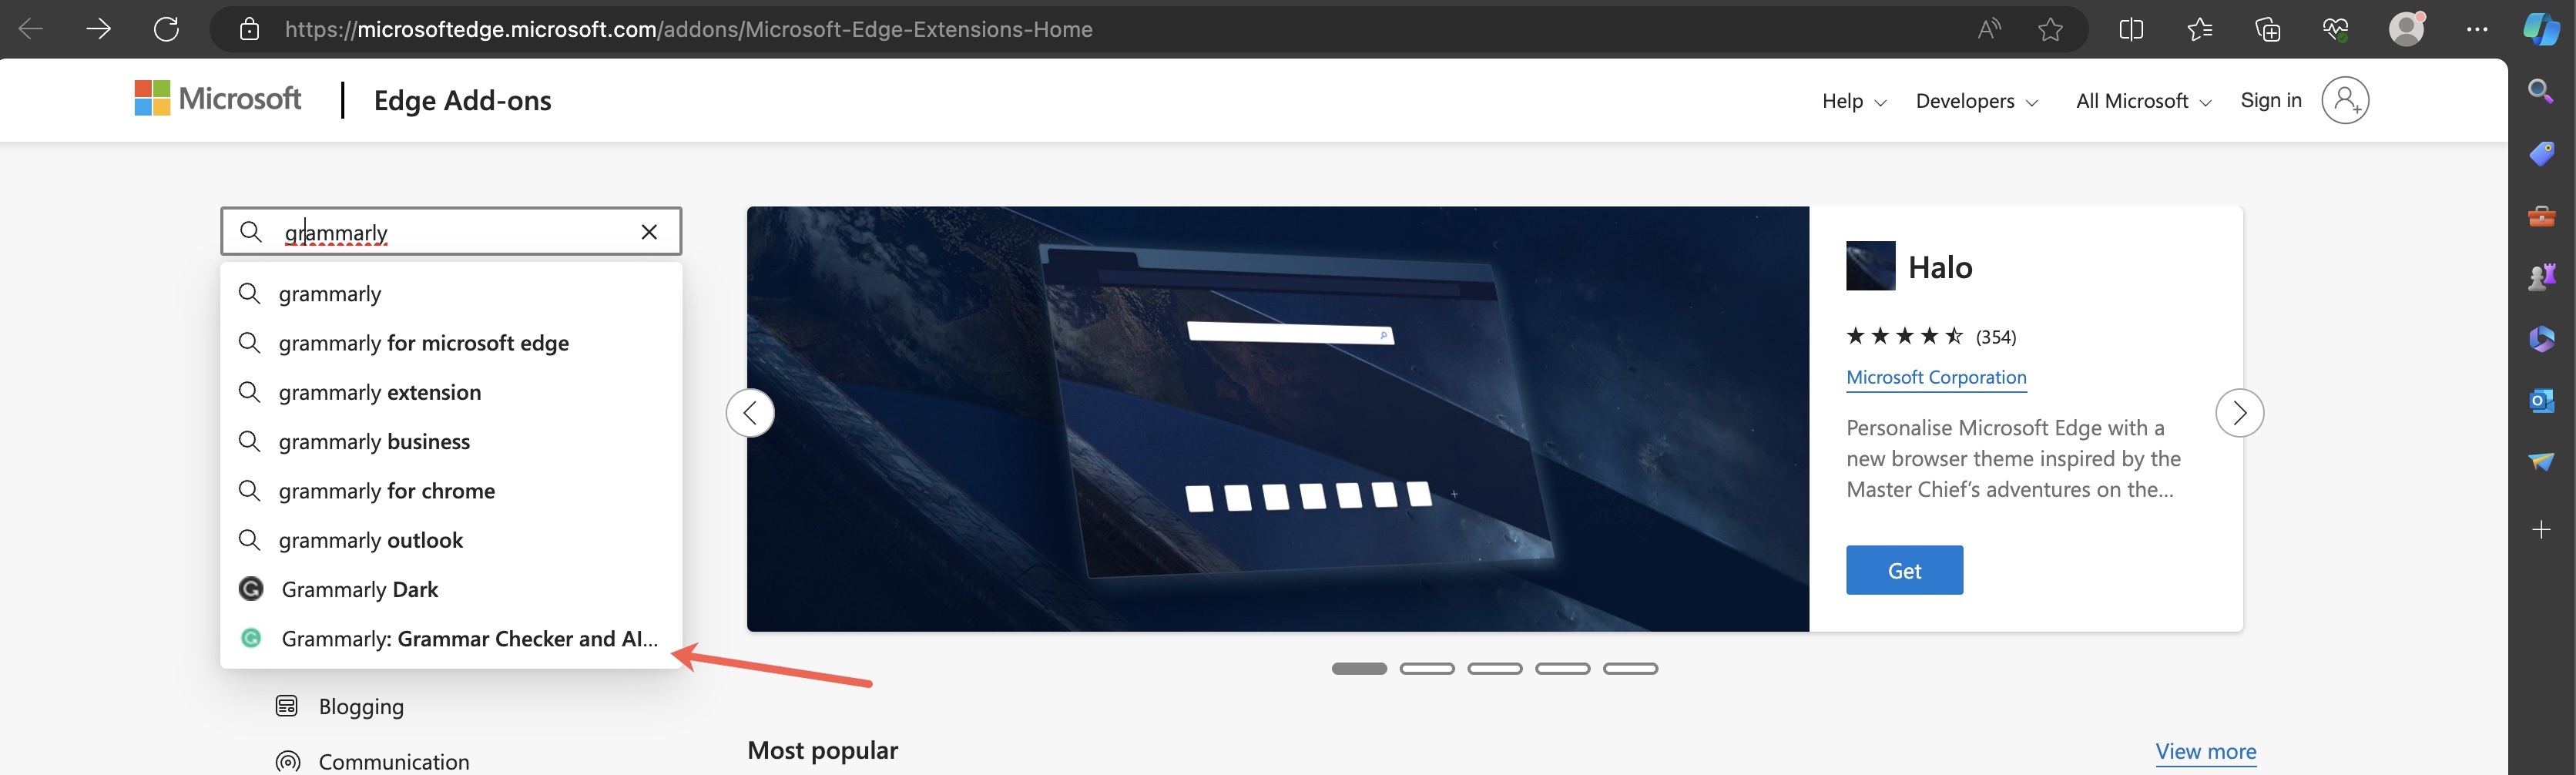 Figure 4: Edge Add-ons Dashboard Search Screen